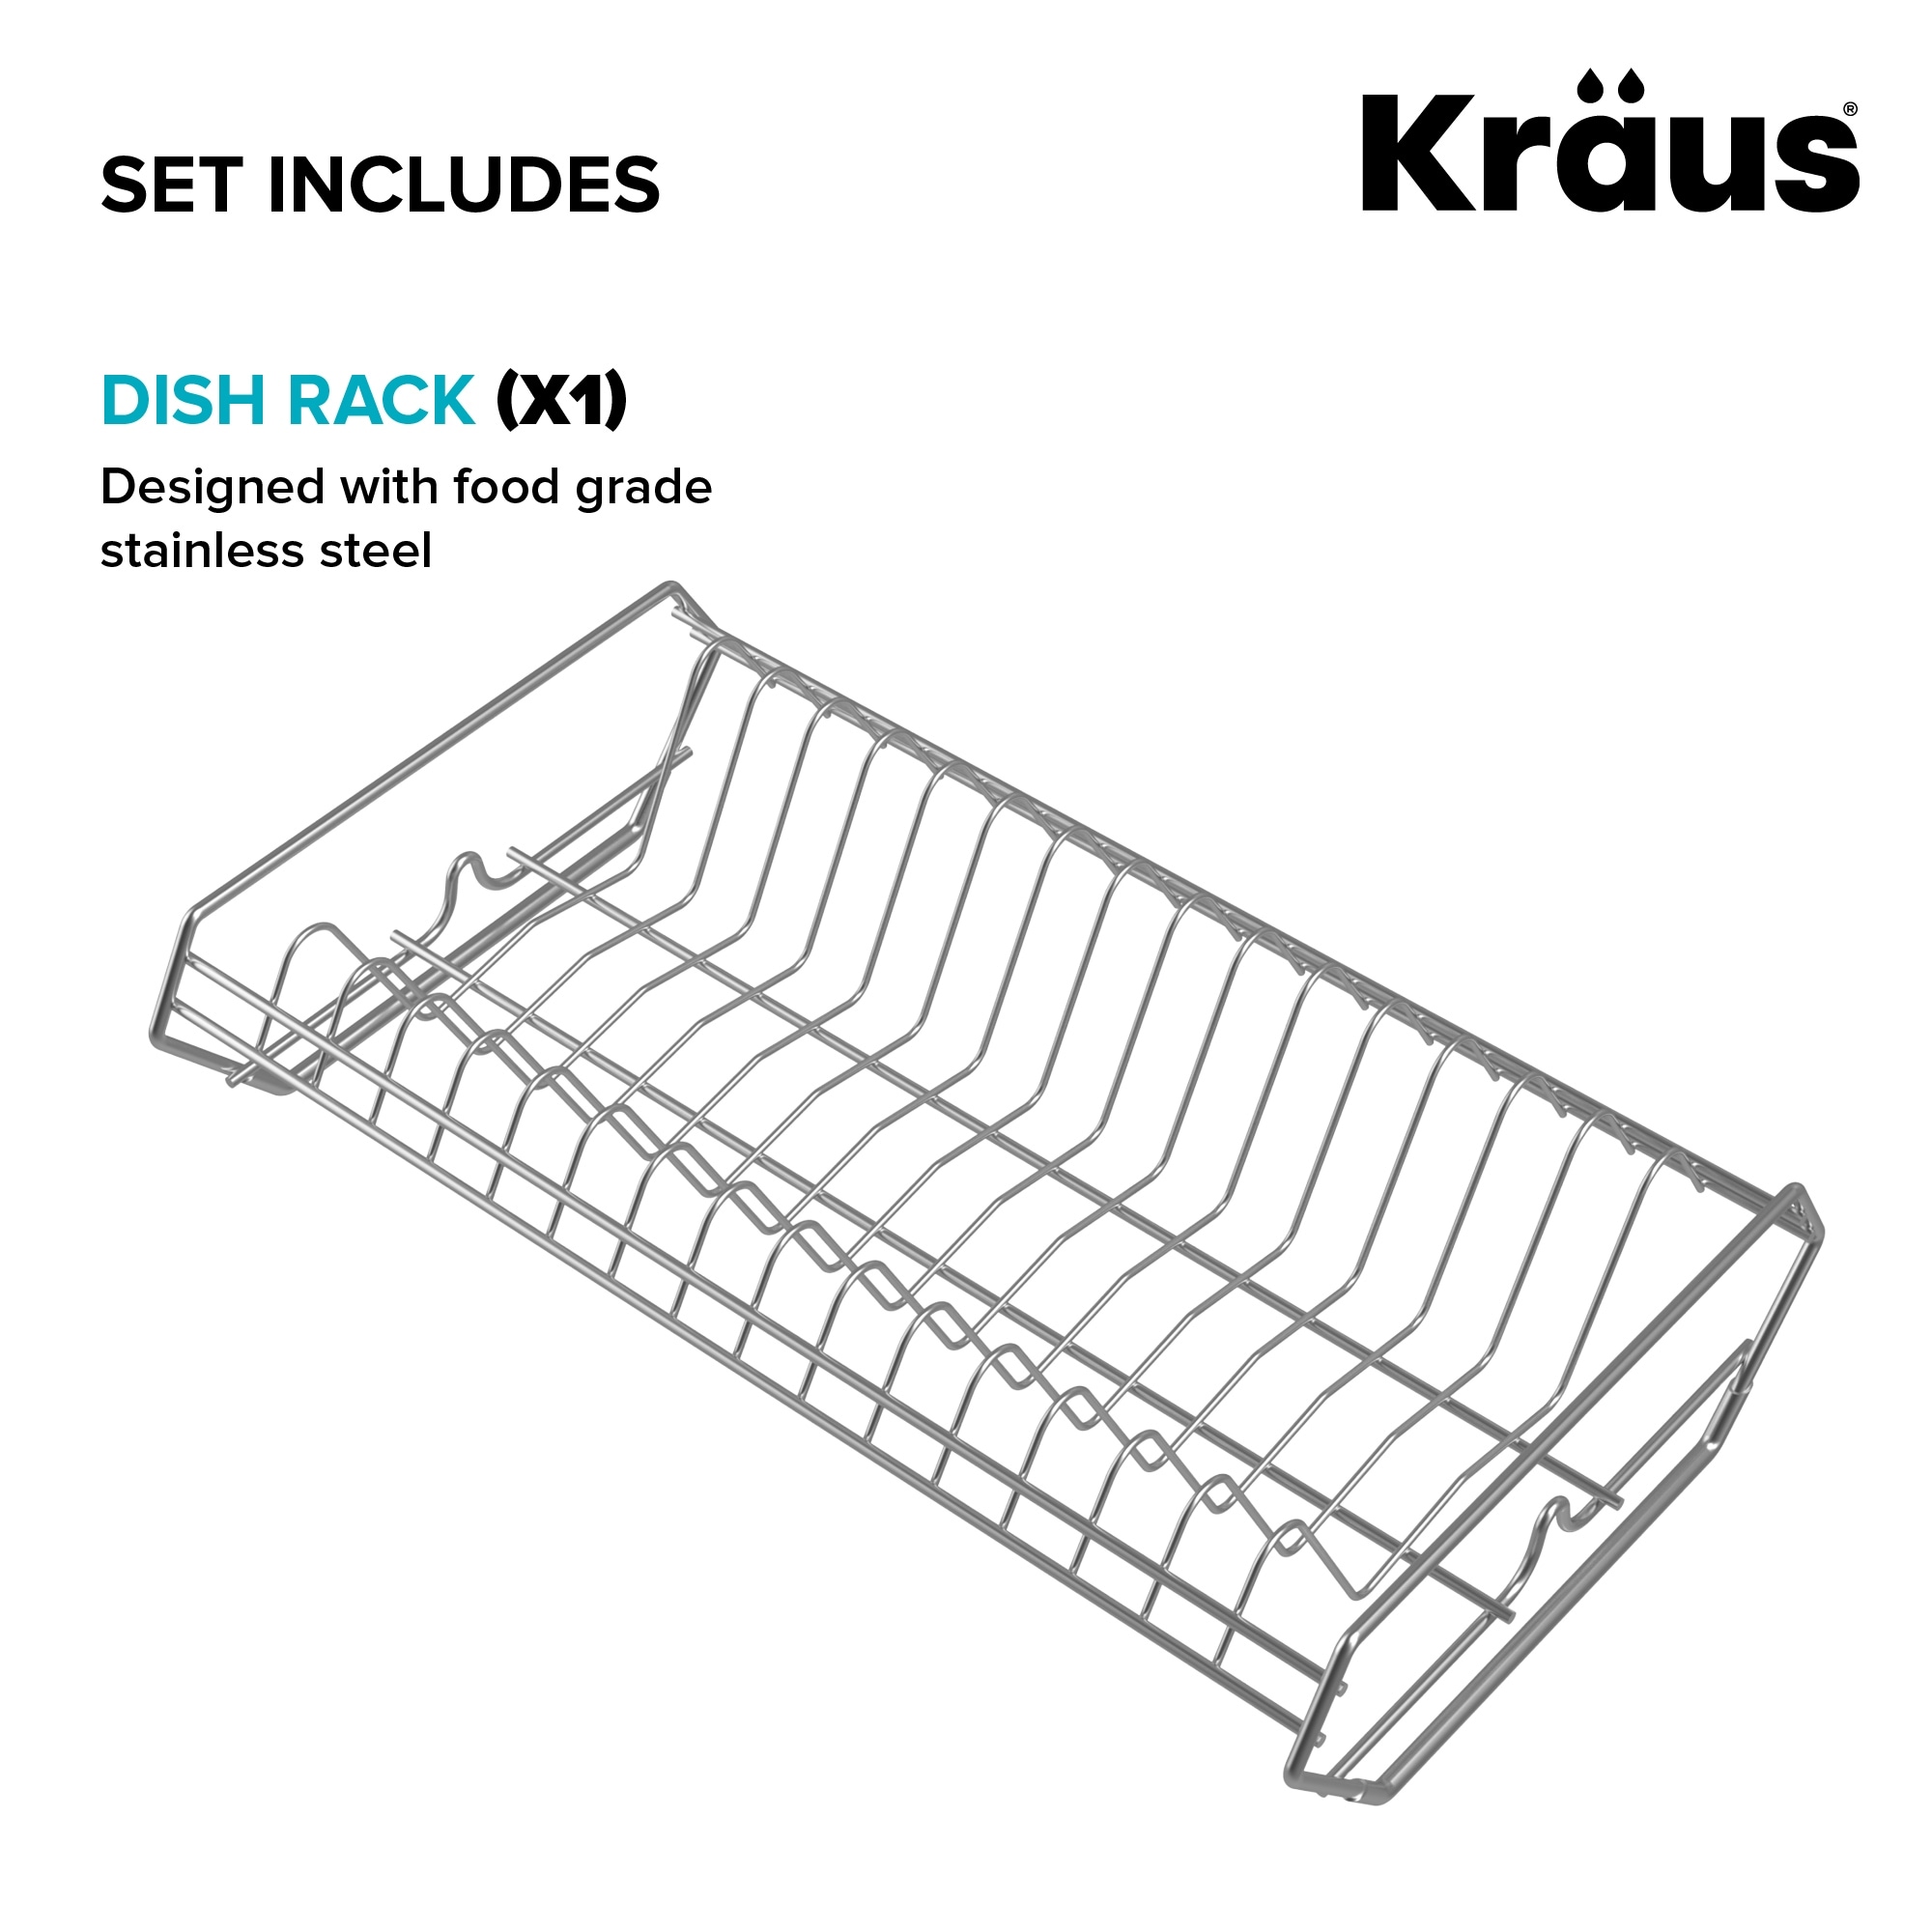 Kraus 12 Wide Dish Drying Rack - Bed Bath & Beyond - 31273207